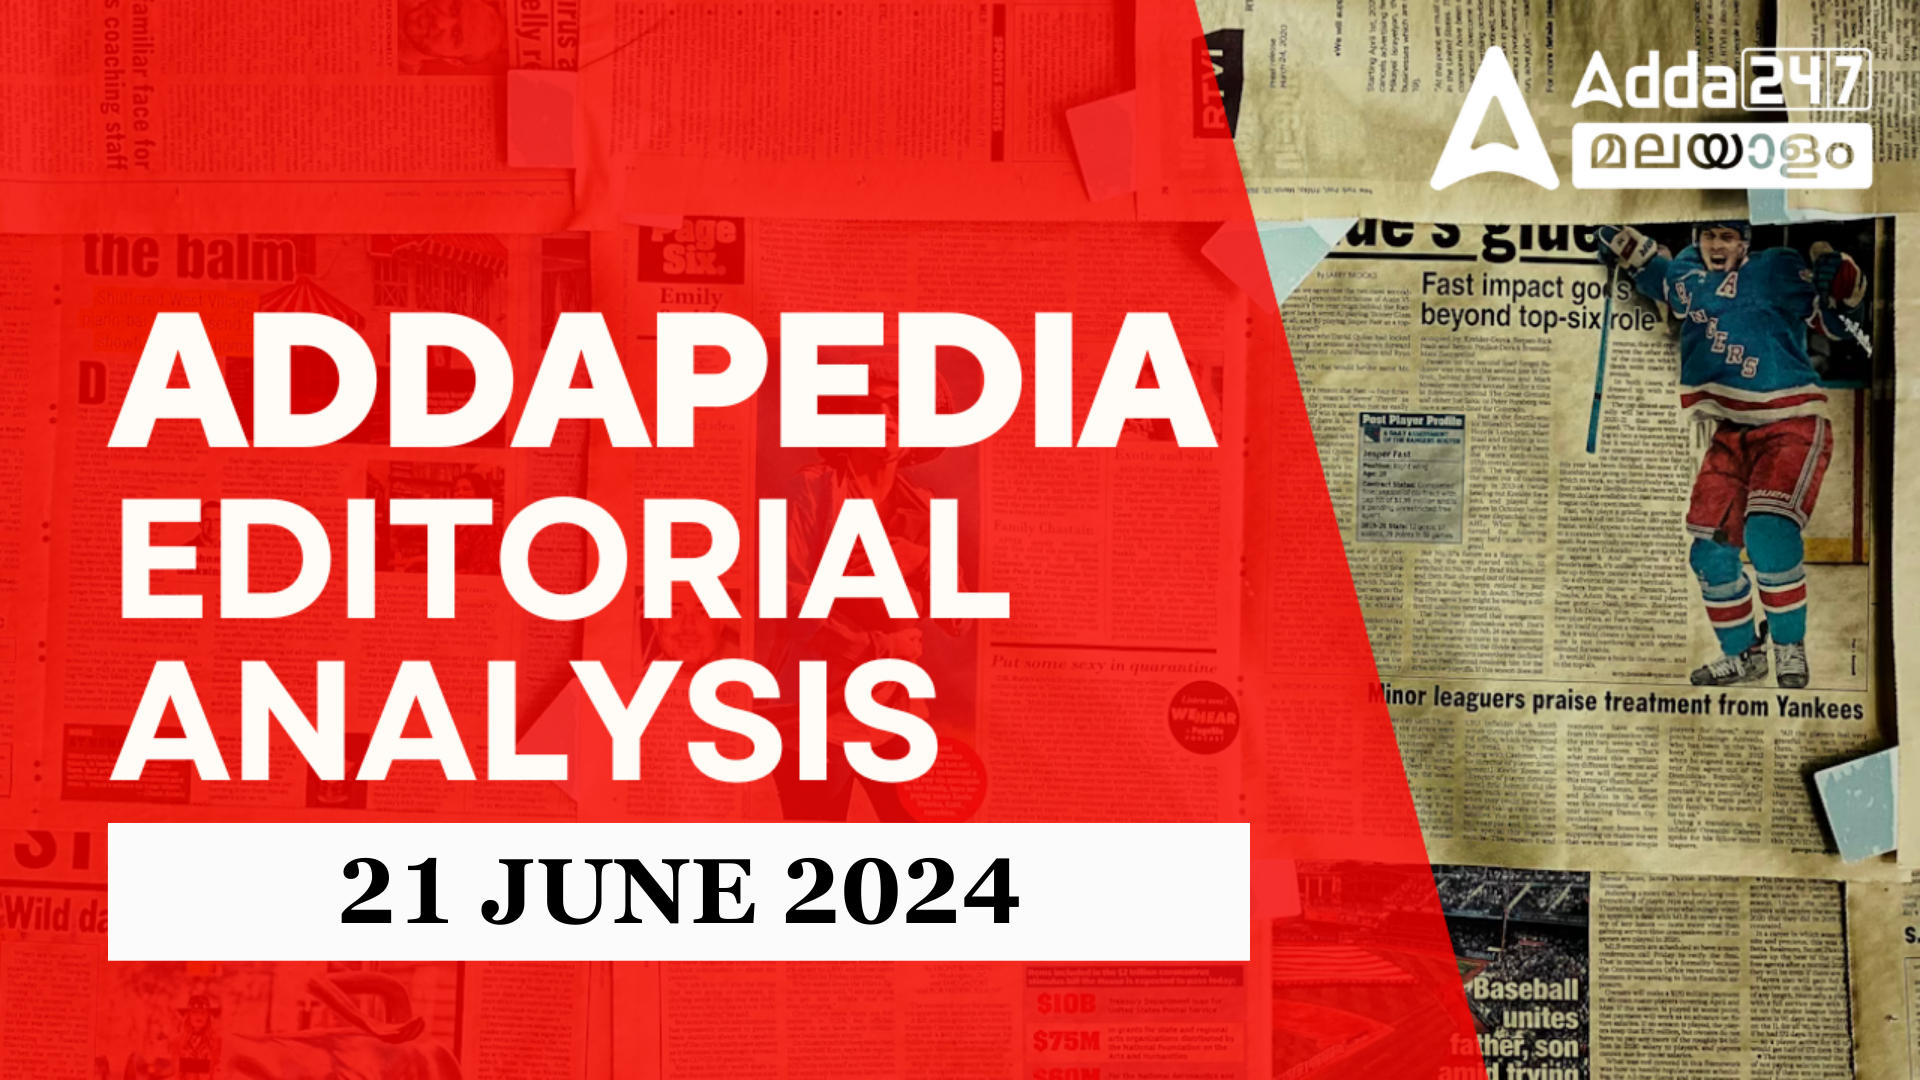 Addapedia Editorial Analysis - 21 June 2024, Download PDF